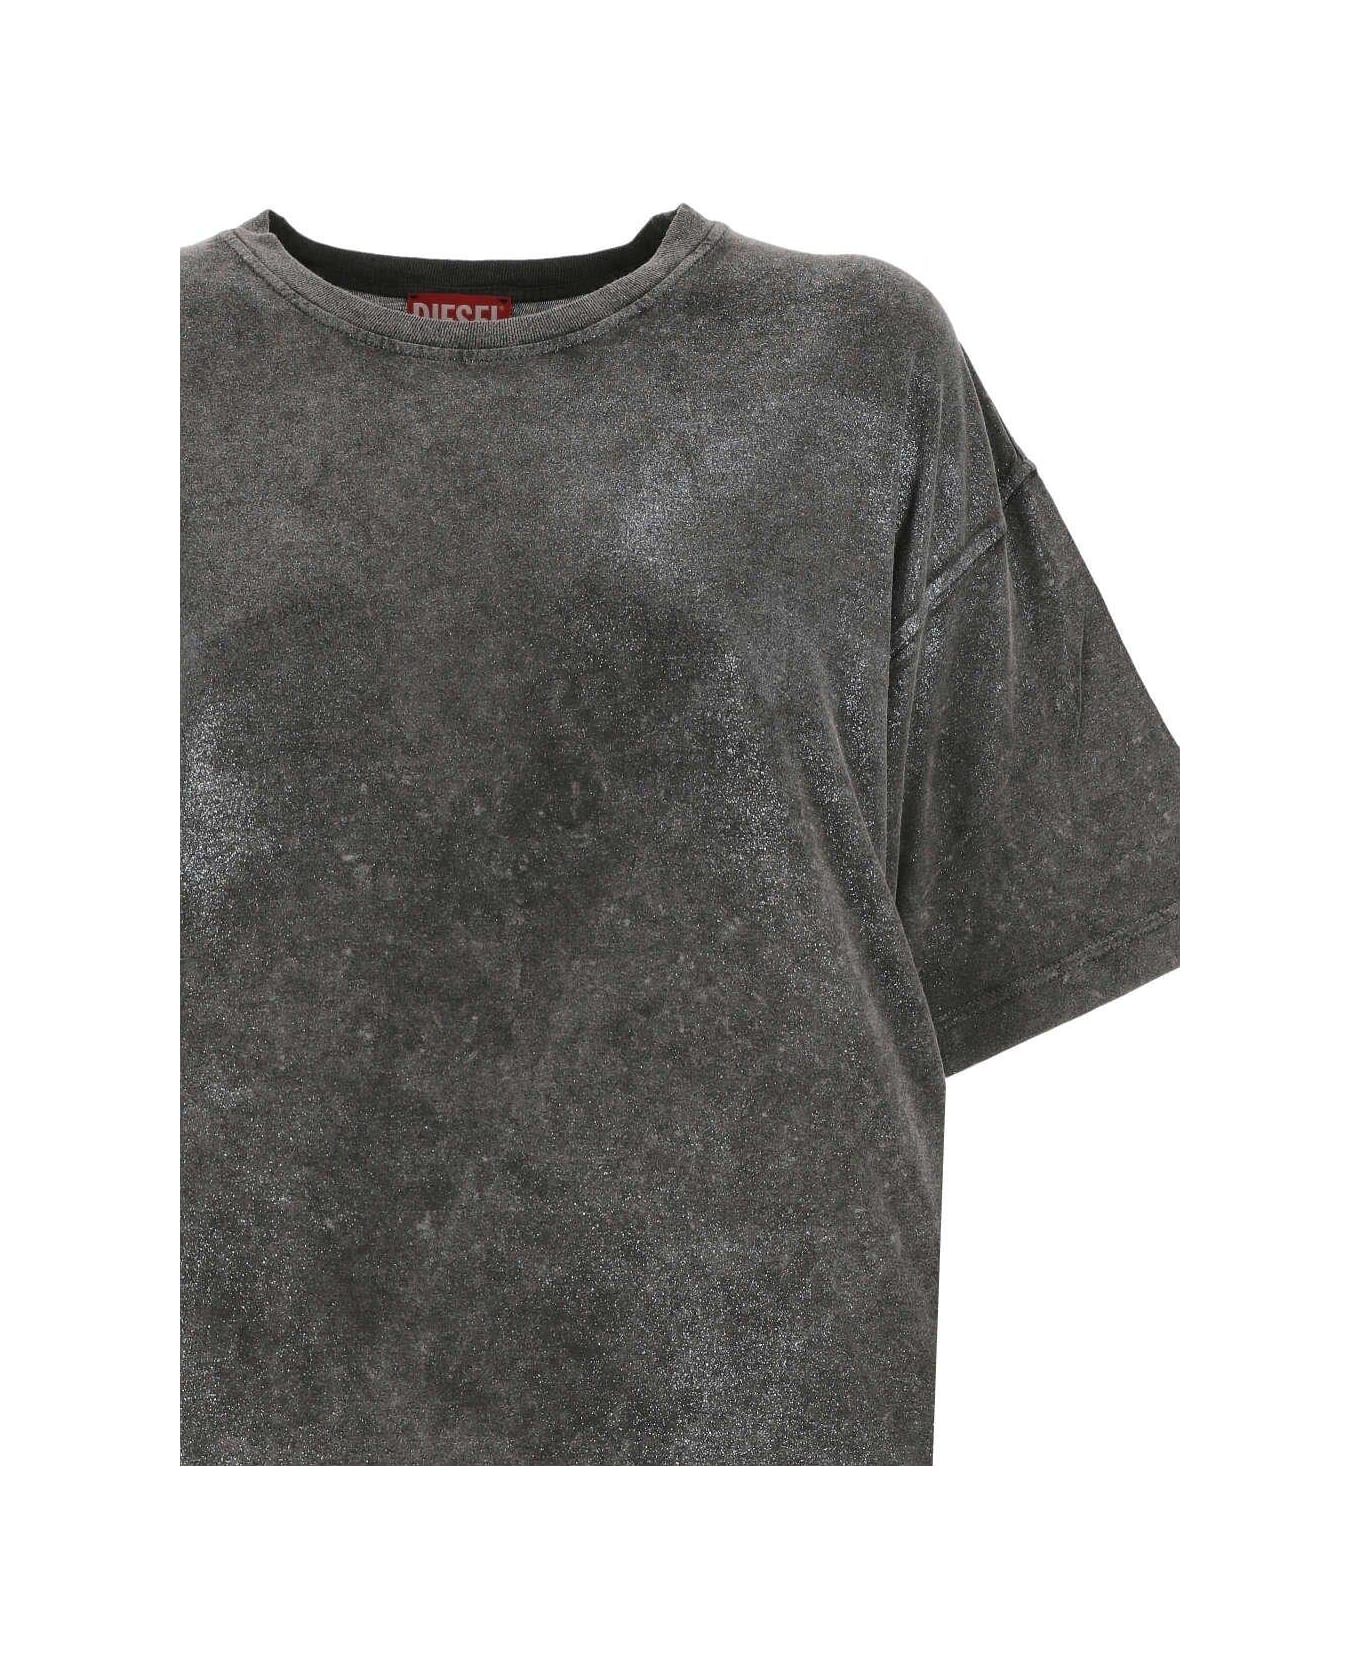 Diesel T-buxt Faded Metallic T-shirt - Non definito